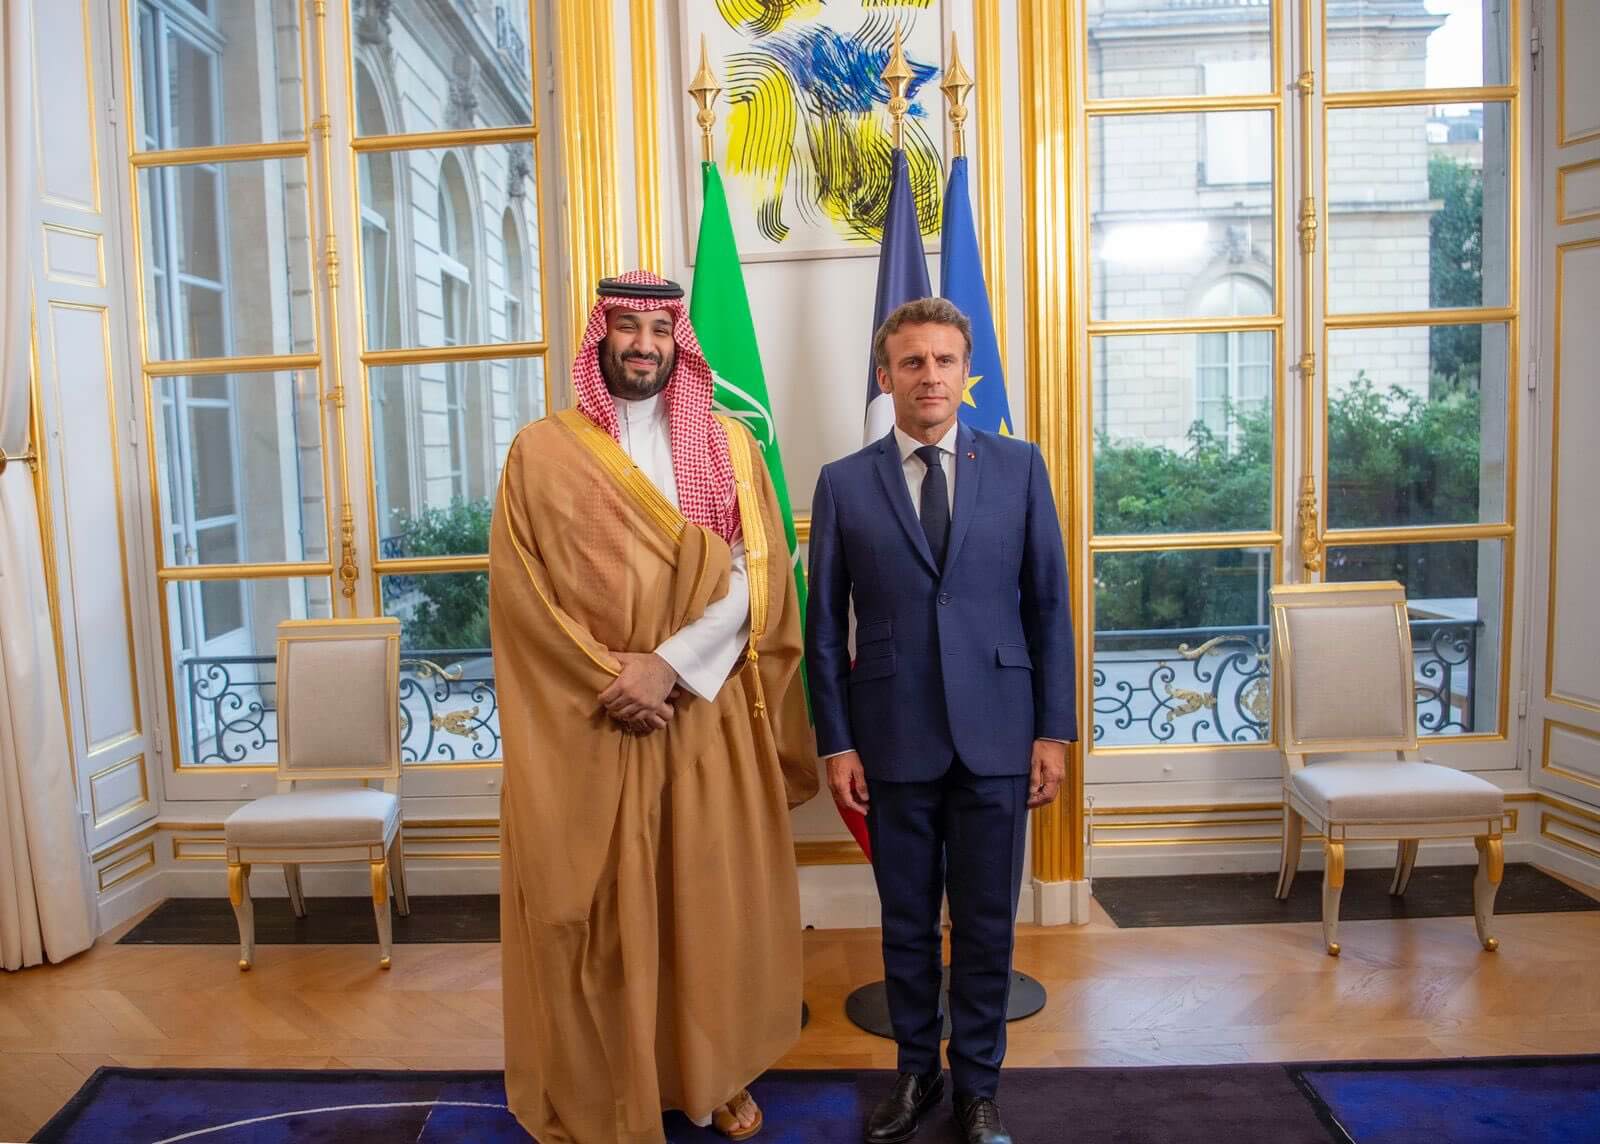 Rights Groups Condemn Macron For Hosting Saudi Prince as Europe Seeks Energy Alternatives